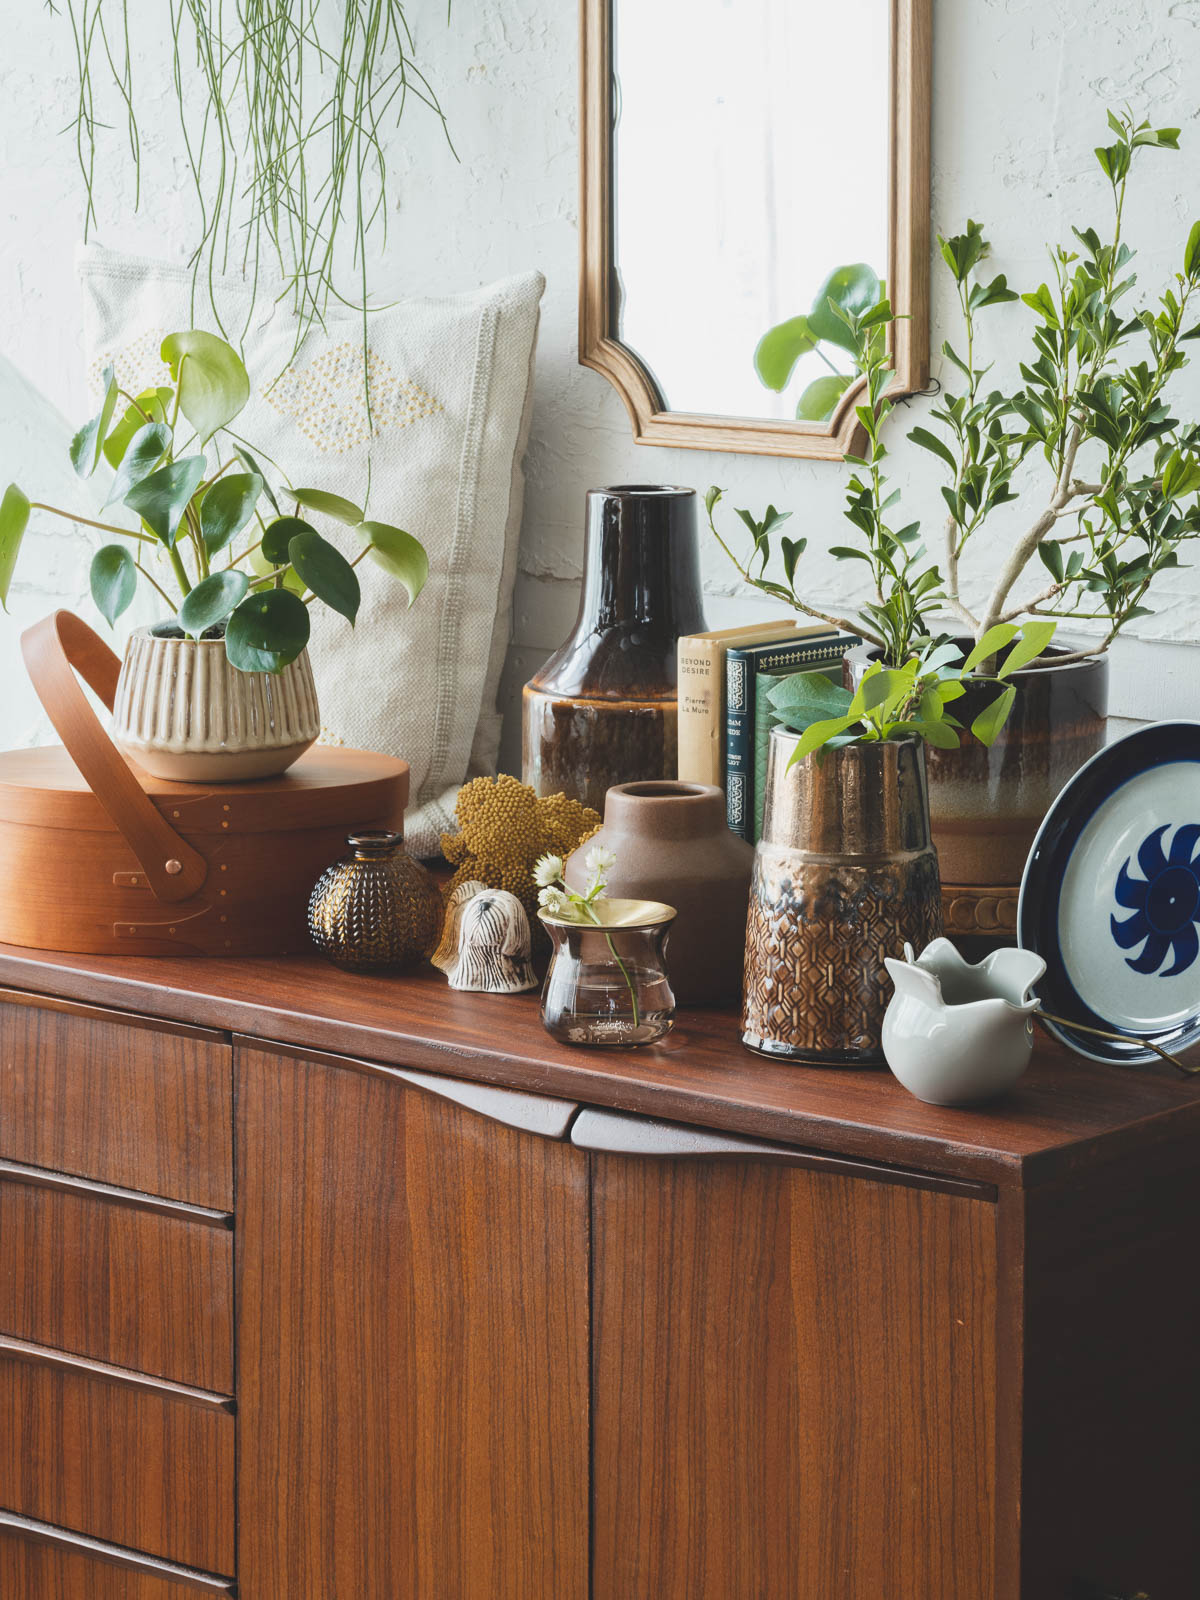 House Flower Vase — ANTRY USE ONLY GENUINE